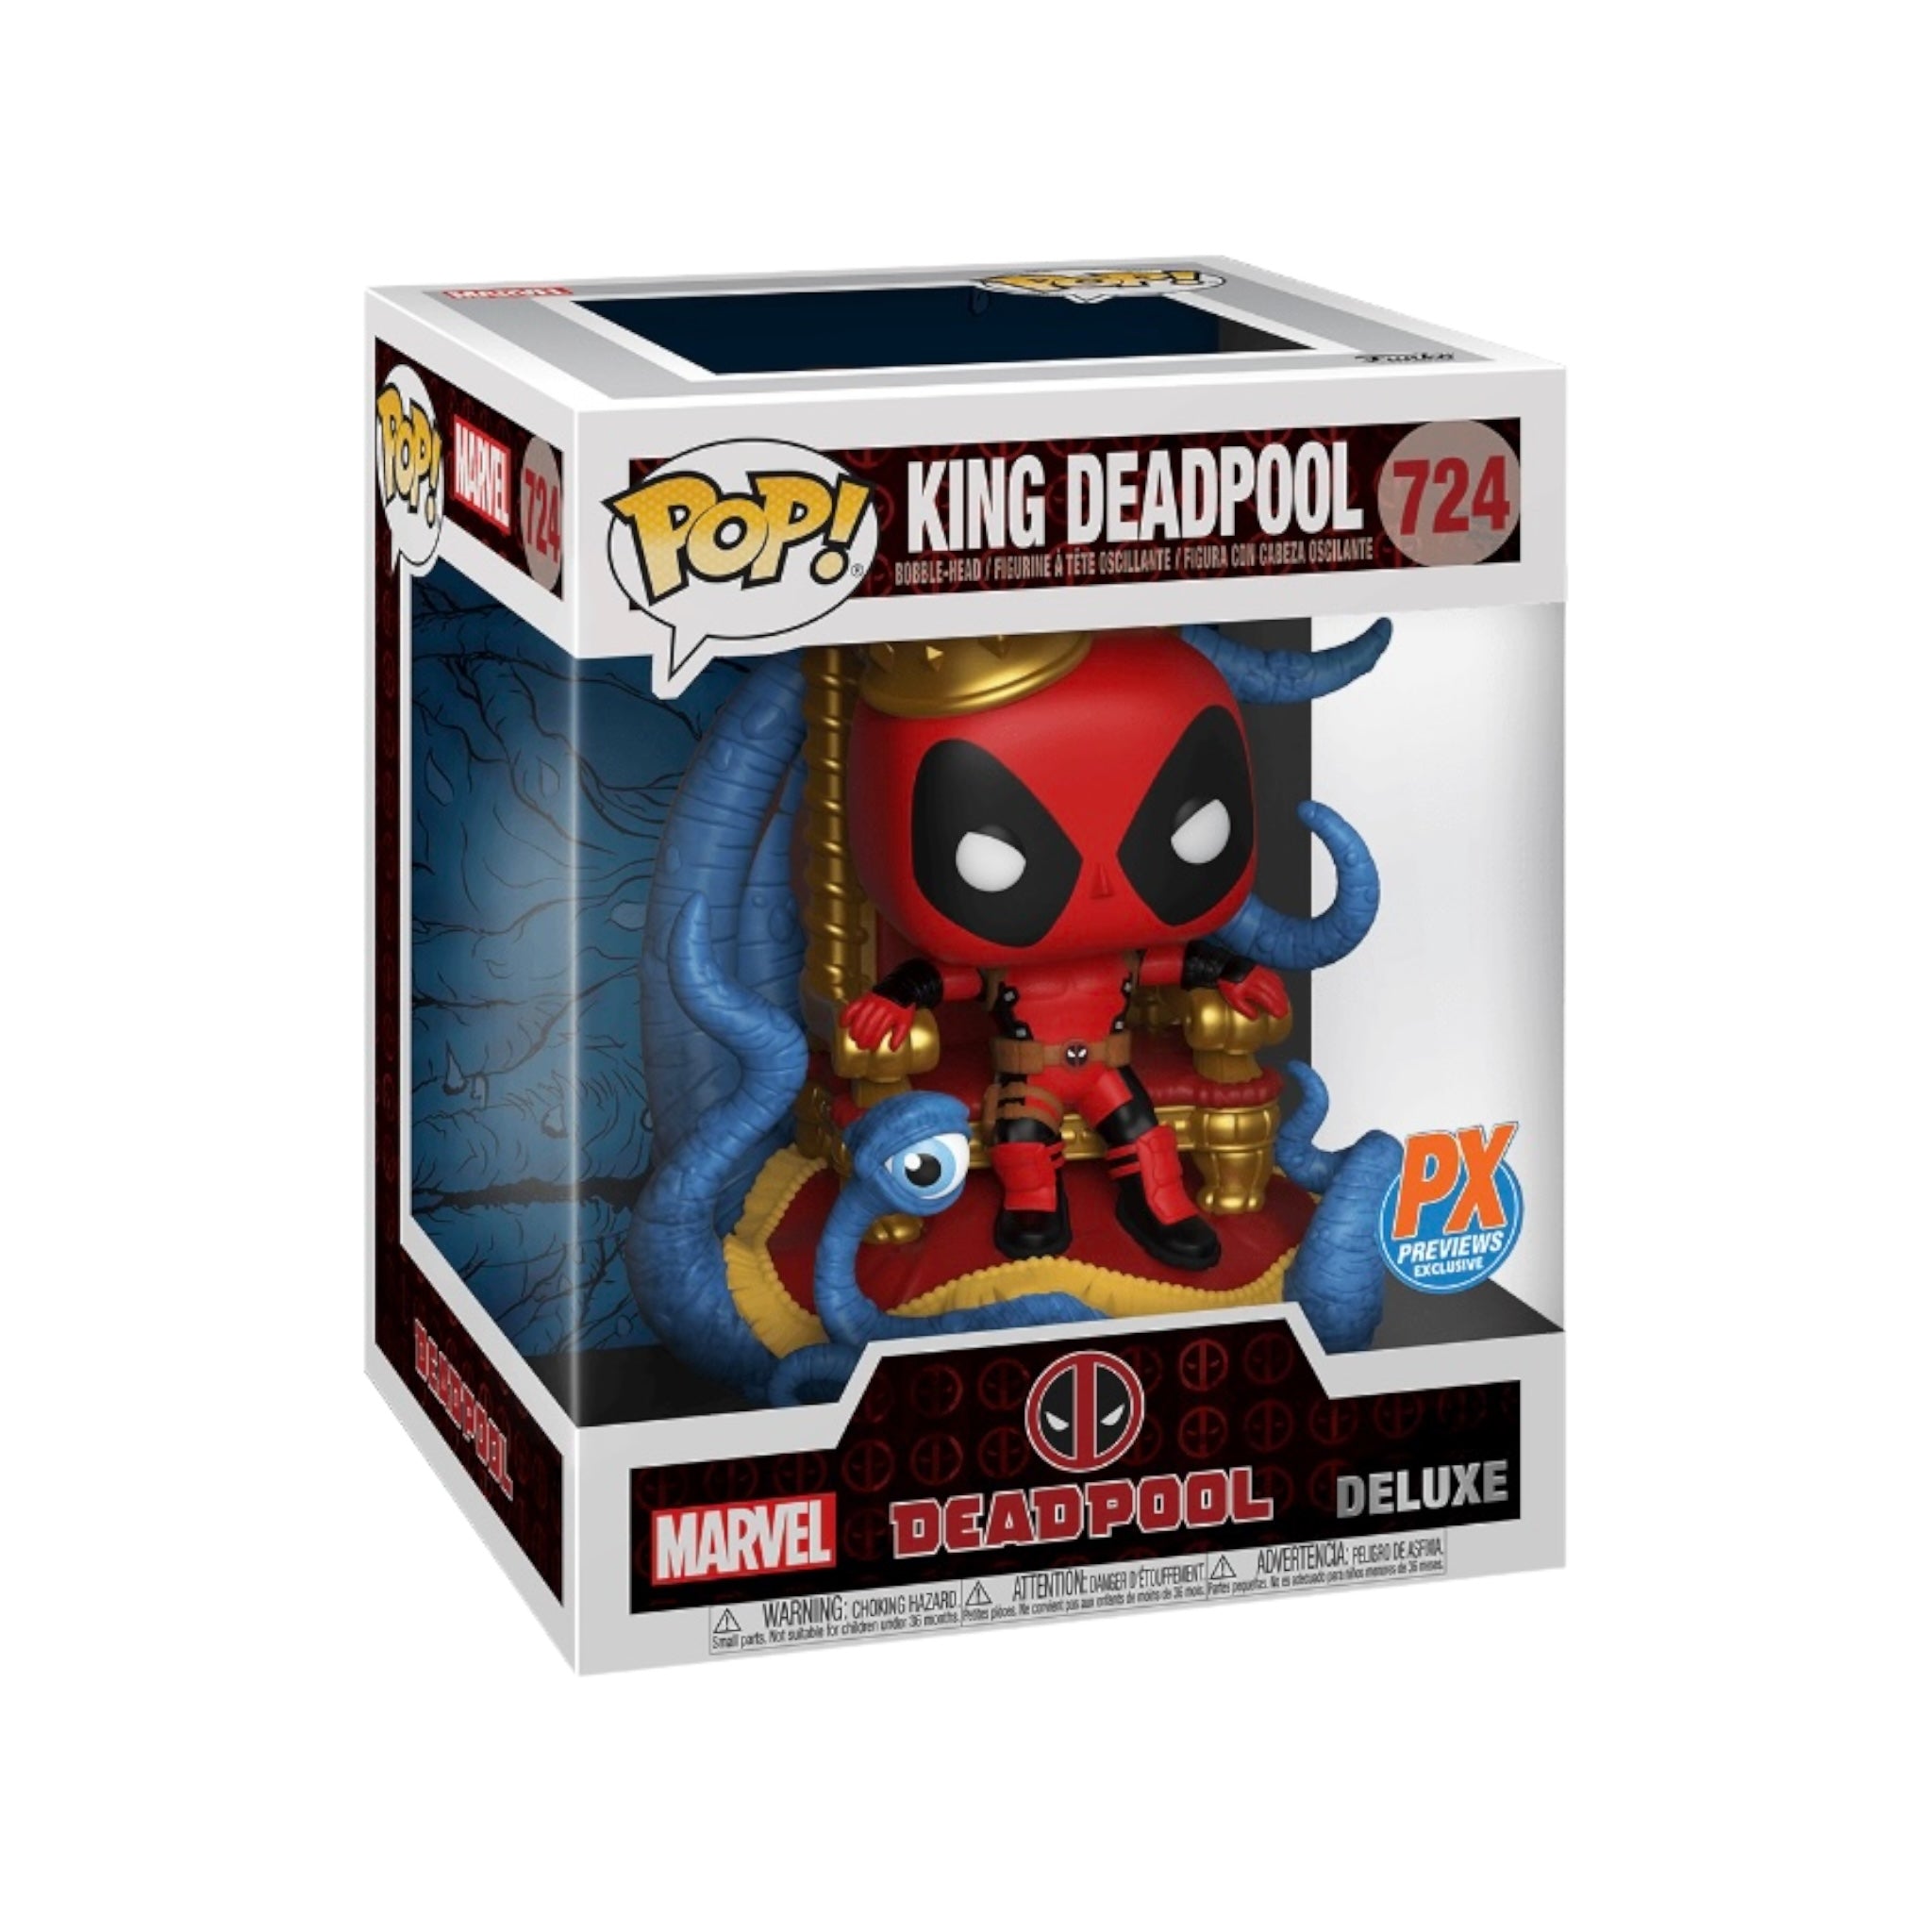 King Deadpool #724 Deluxe Funko Pop! - Deadpool - PX Previews Exclusive